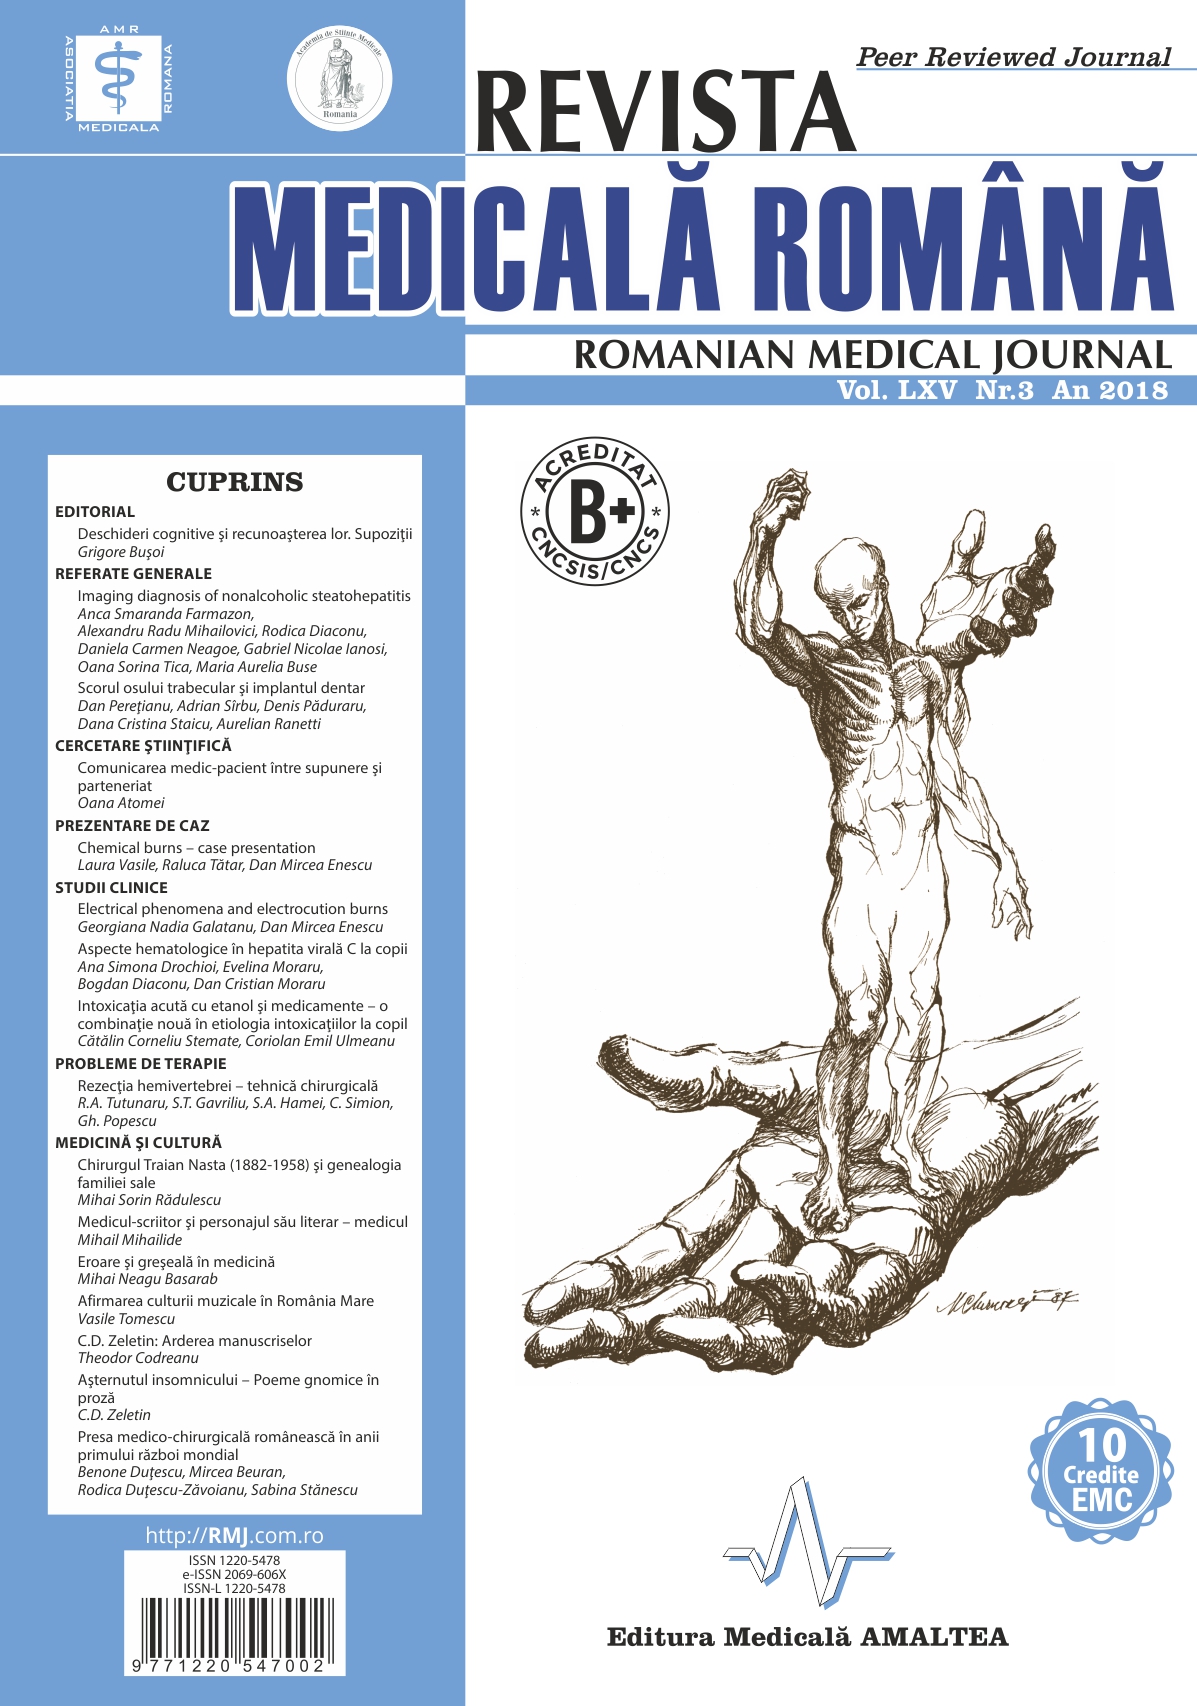 REVISTA MEDICALA ROMANA - Romanian Medical Journal, Vol. LXV, No. 3, Year 2018